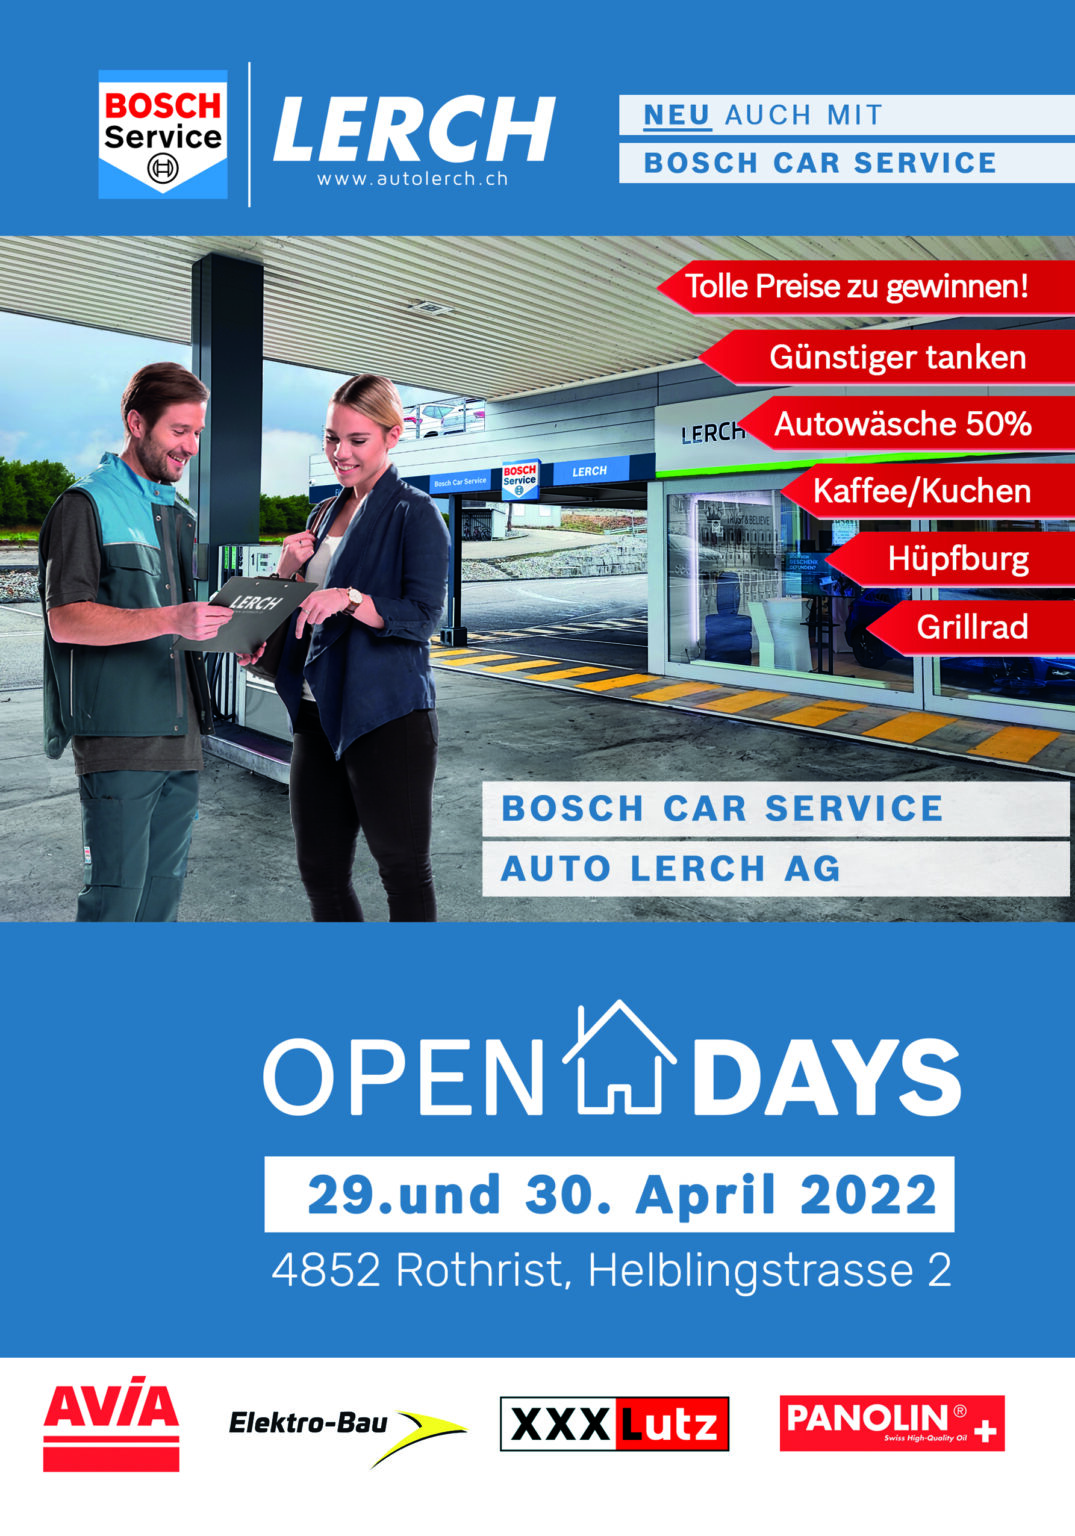 OPEN DAYS am 29. und 30. April 2022 - Autolerch AG Rothrist 4